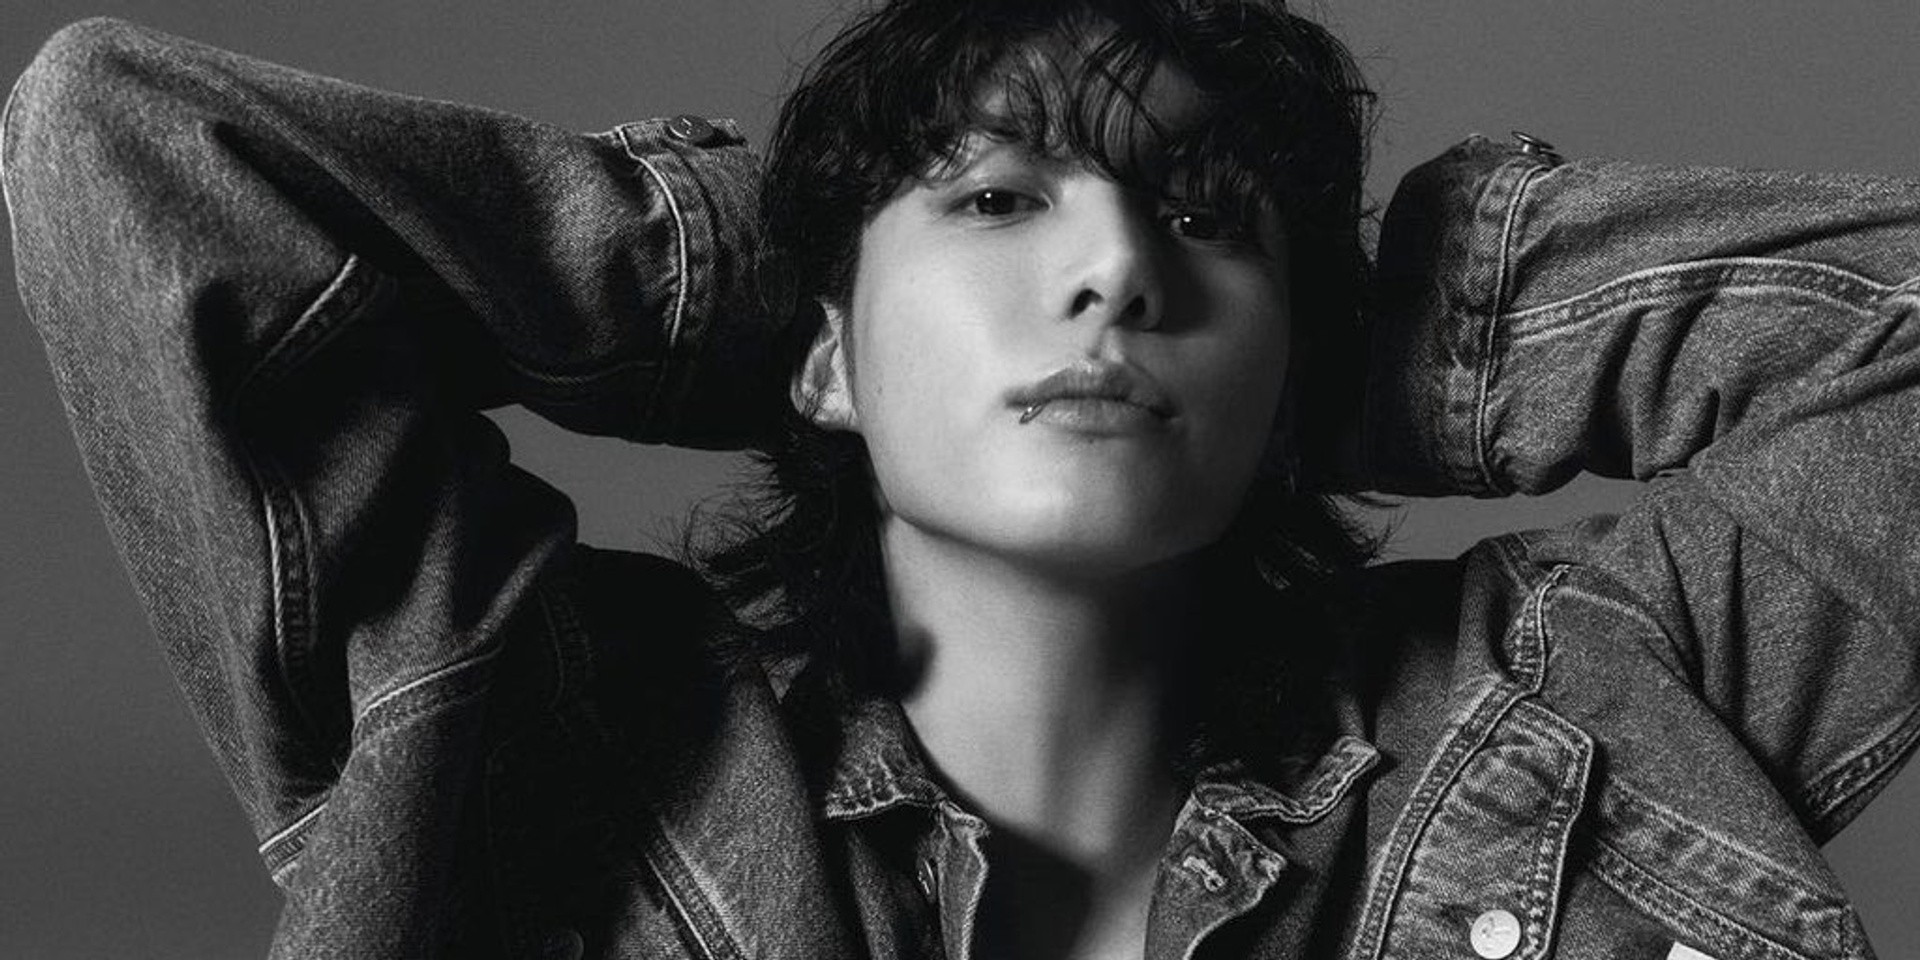 BTS’ Jungkook joins Calvin Klein as new global ambassador